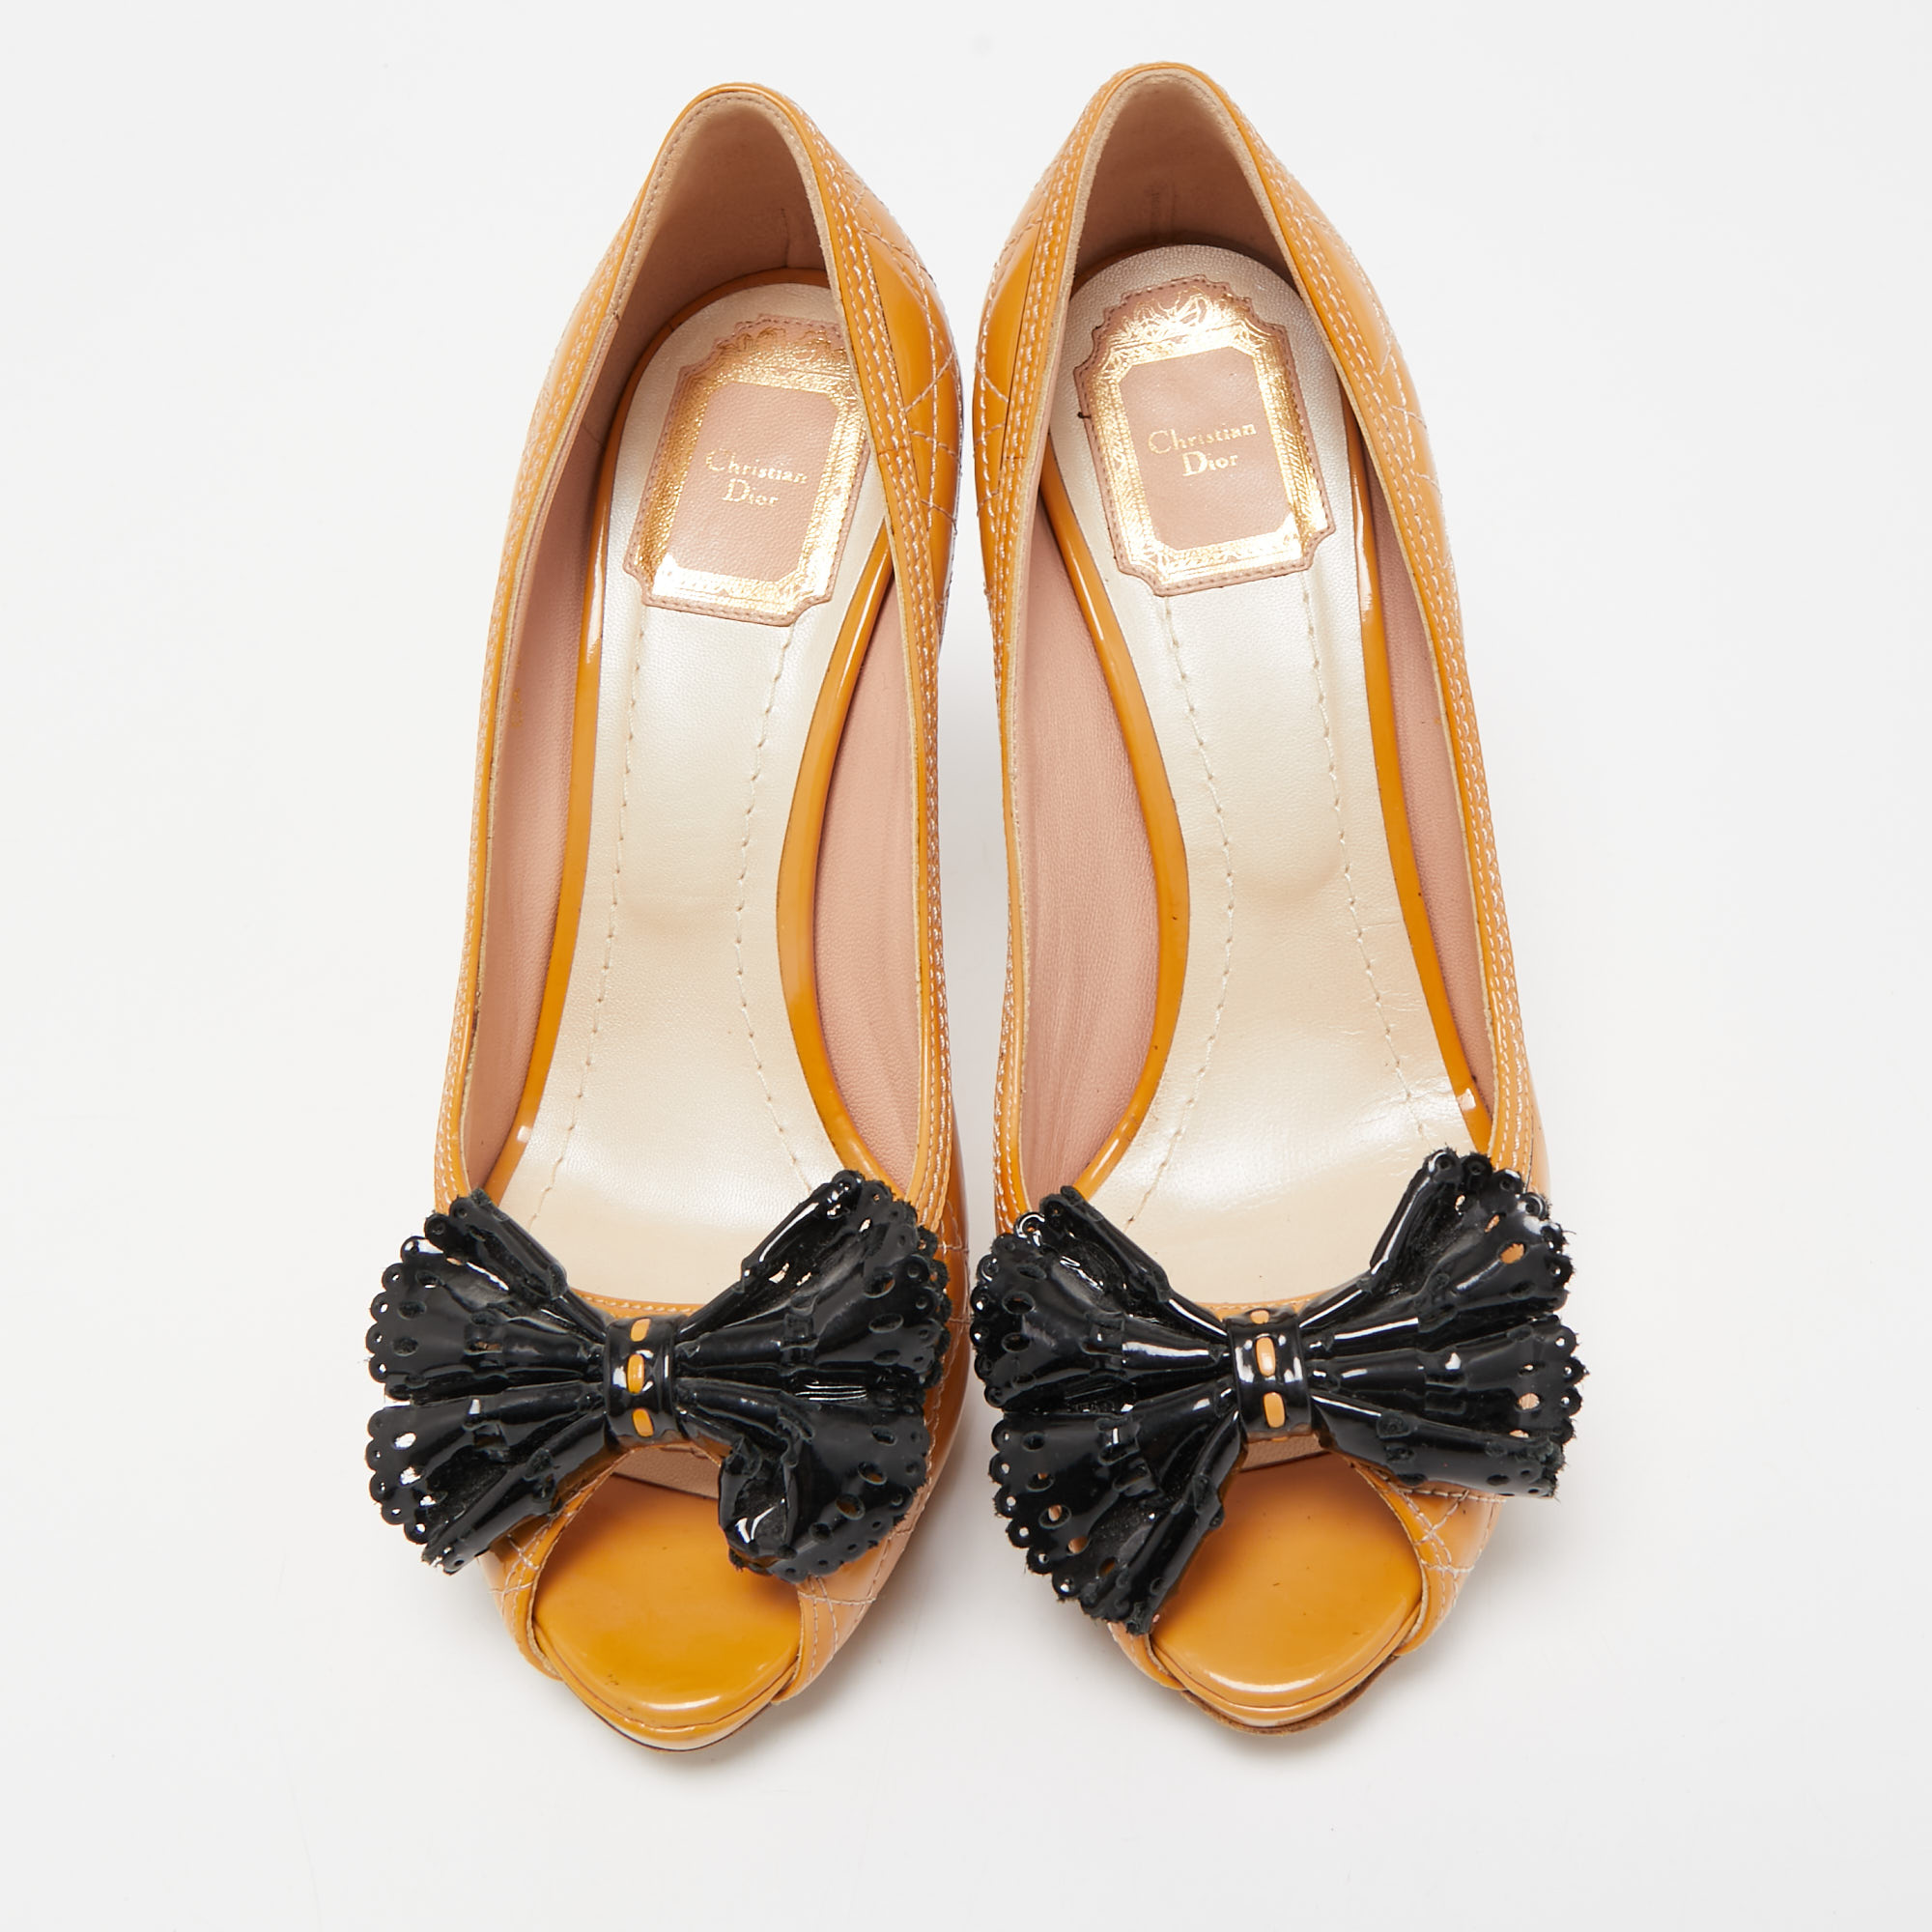 Dior Light Orange/Black Cannage Patent Leather Bow Peep Toe Pumps Size 38.5